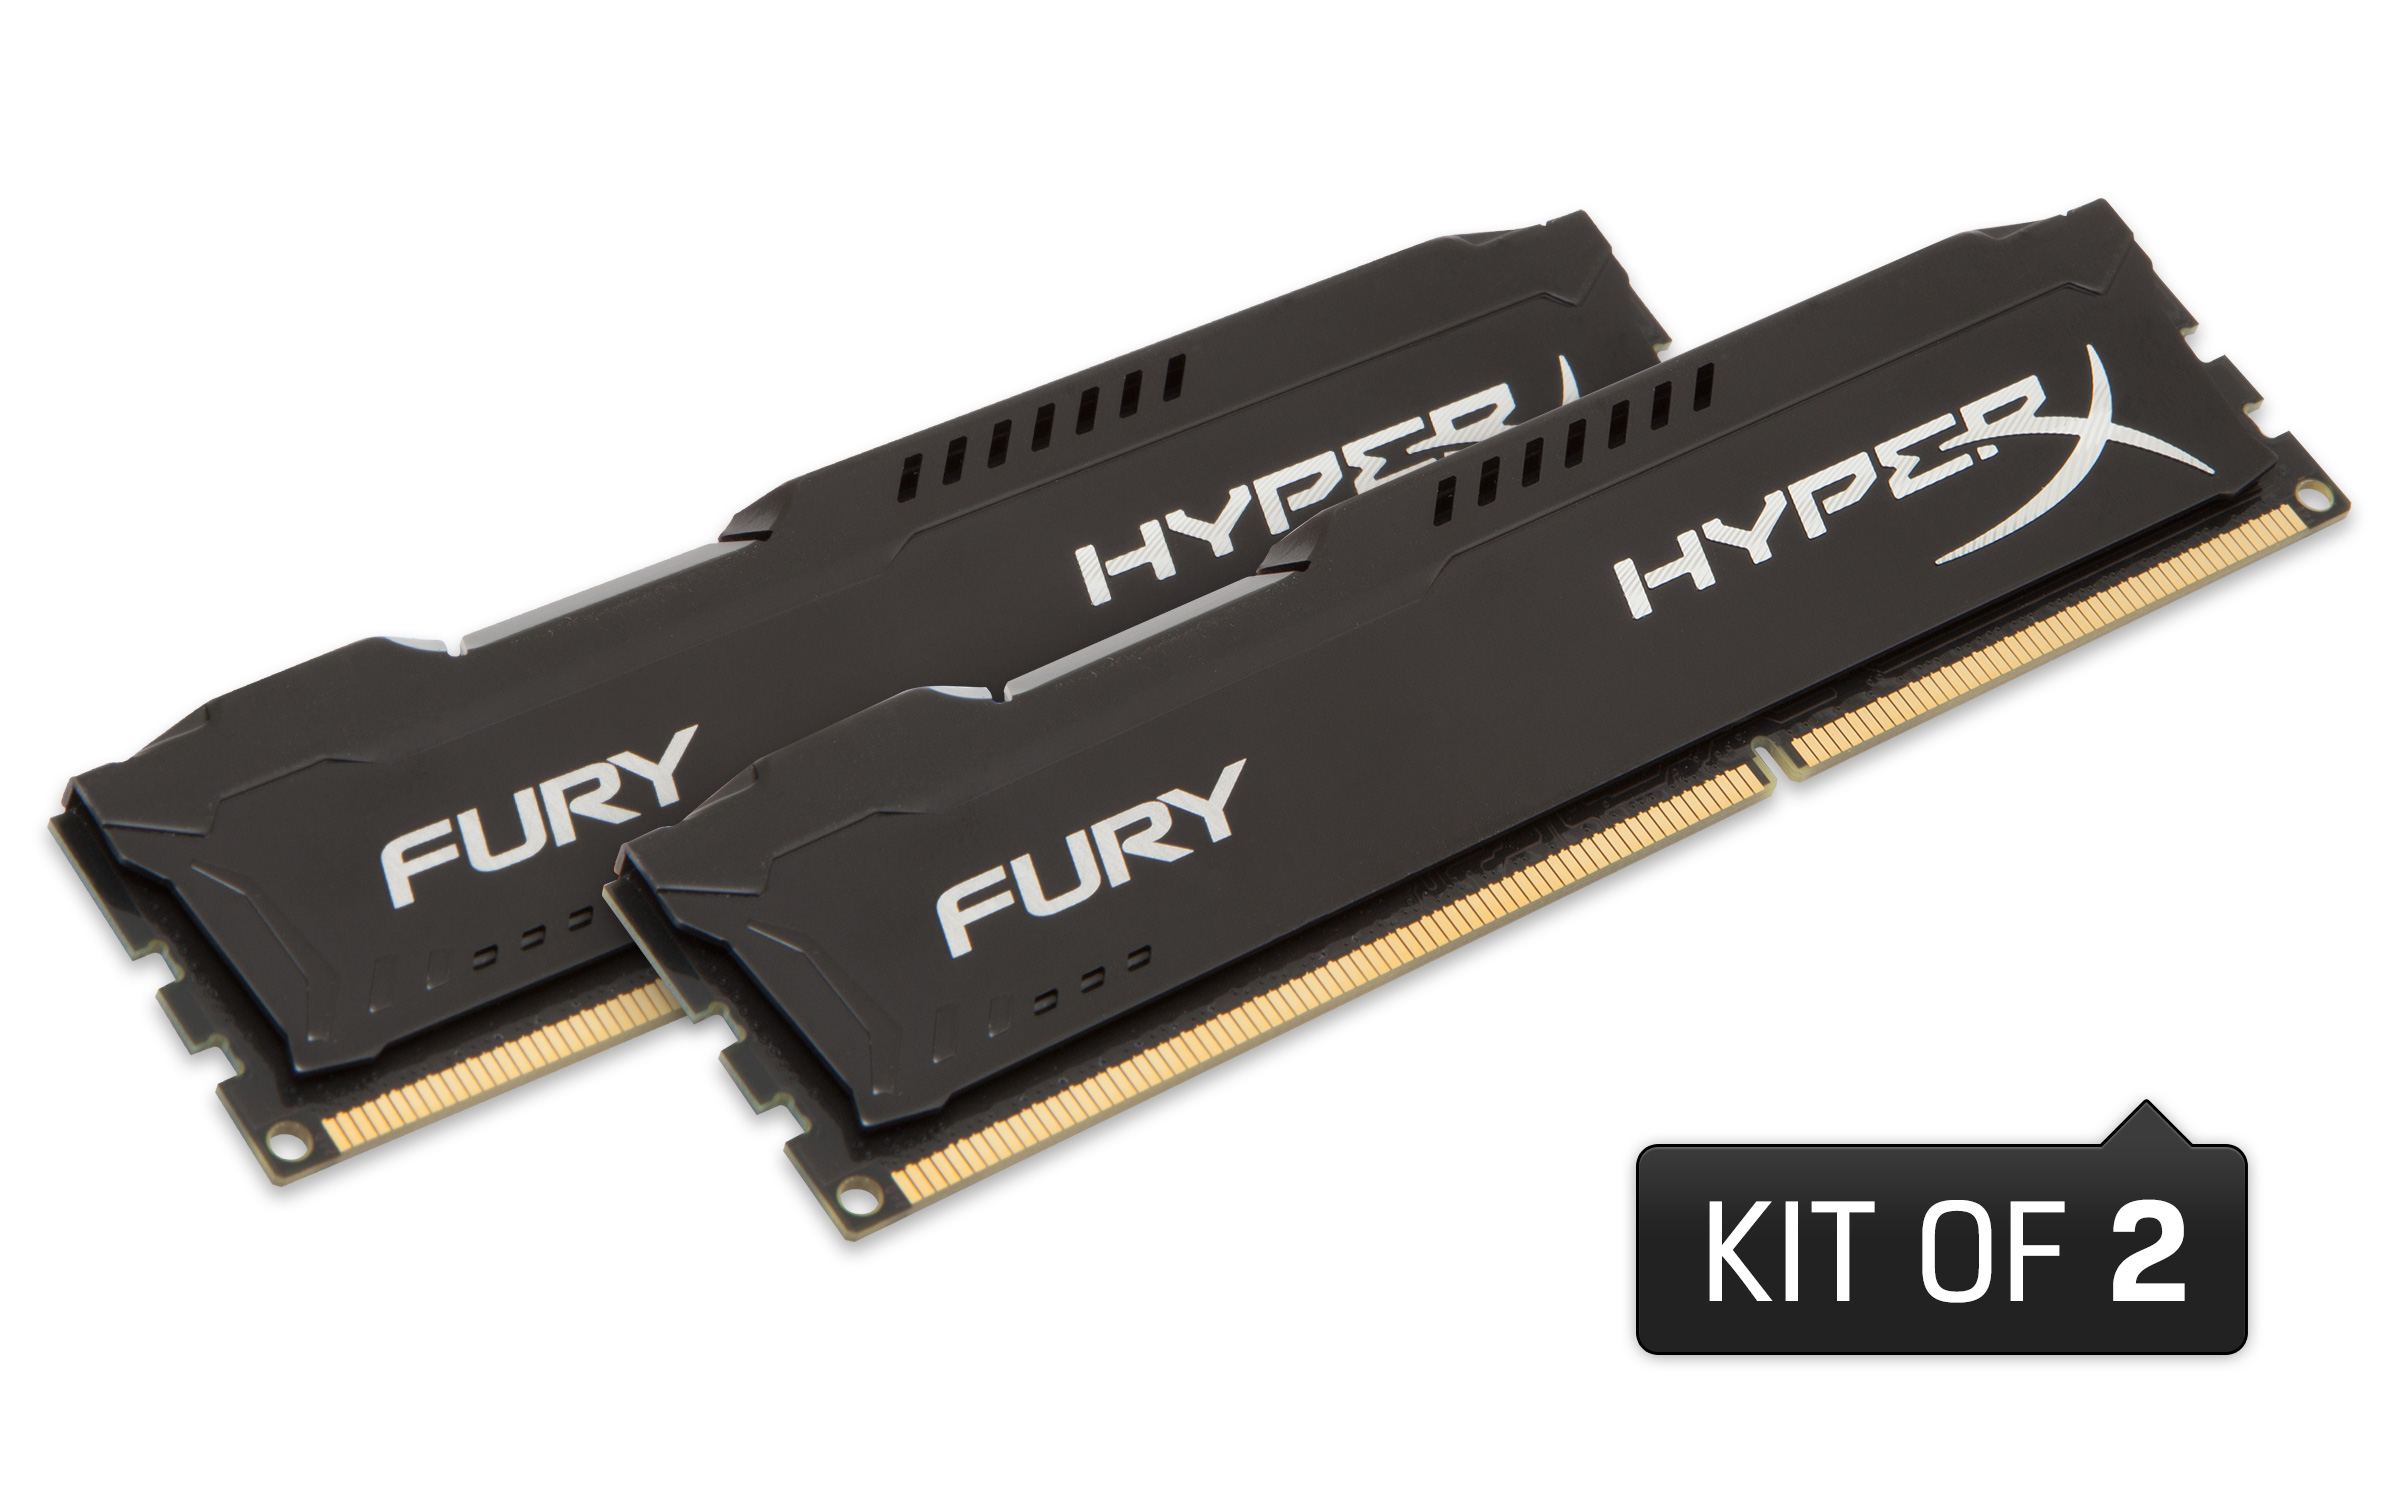 HyperX FURY Memory Black 8GB 1866MHz DDR3 CL10 DIMM (Kit of 2) HX318C10FBK2/8 - image 1 of 2